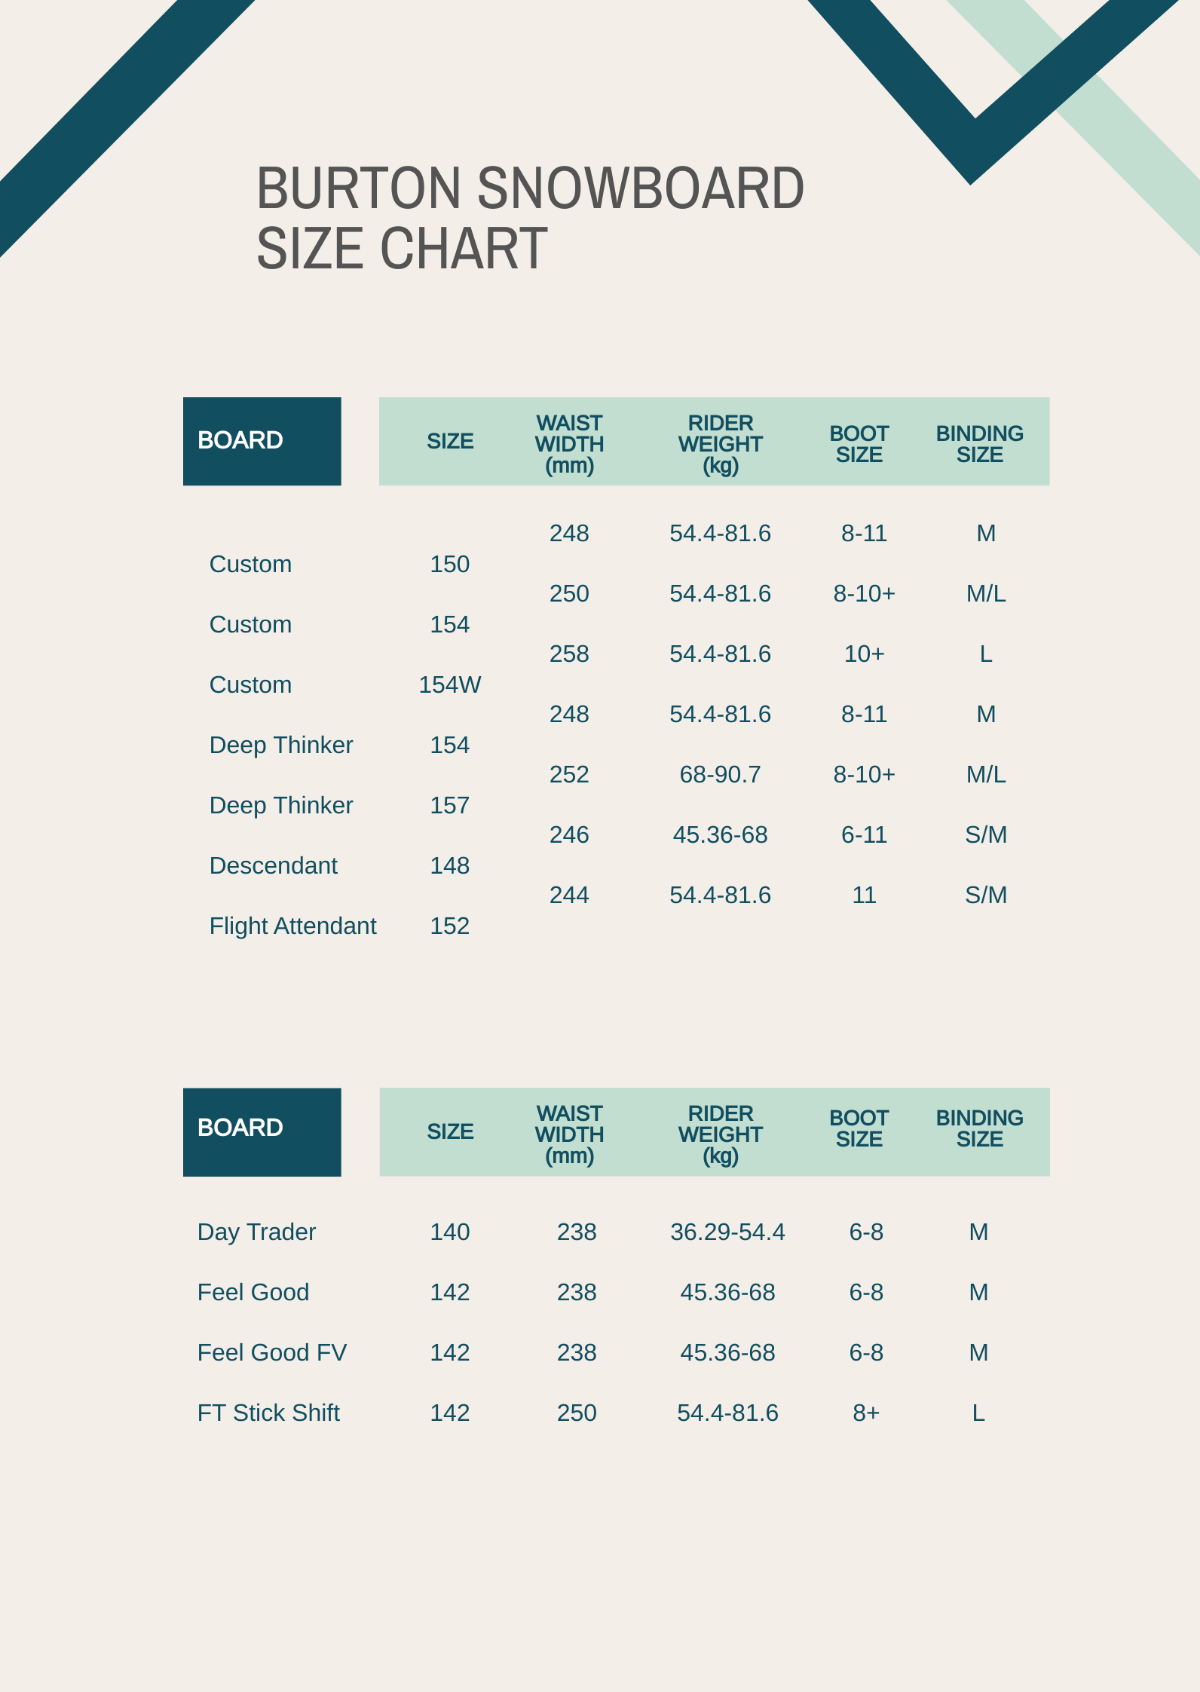 Free Burton Snowboard Size Chart Template